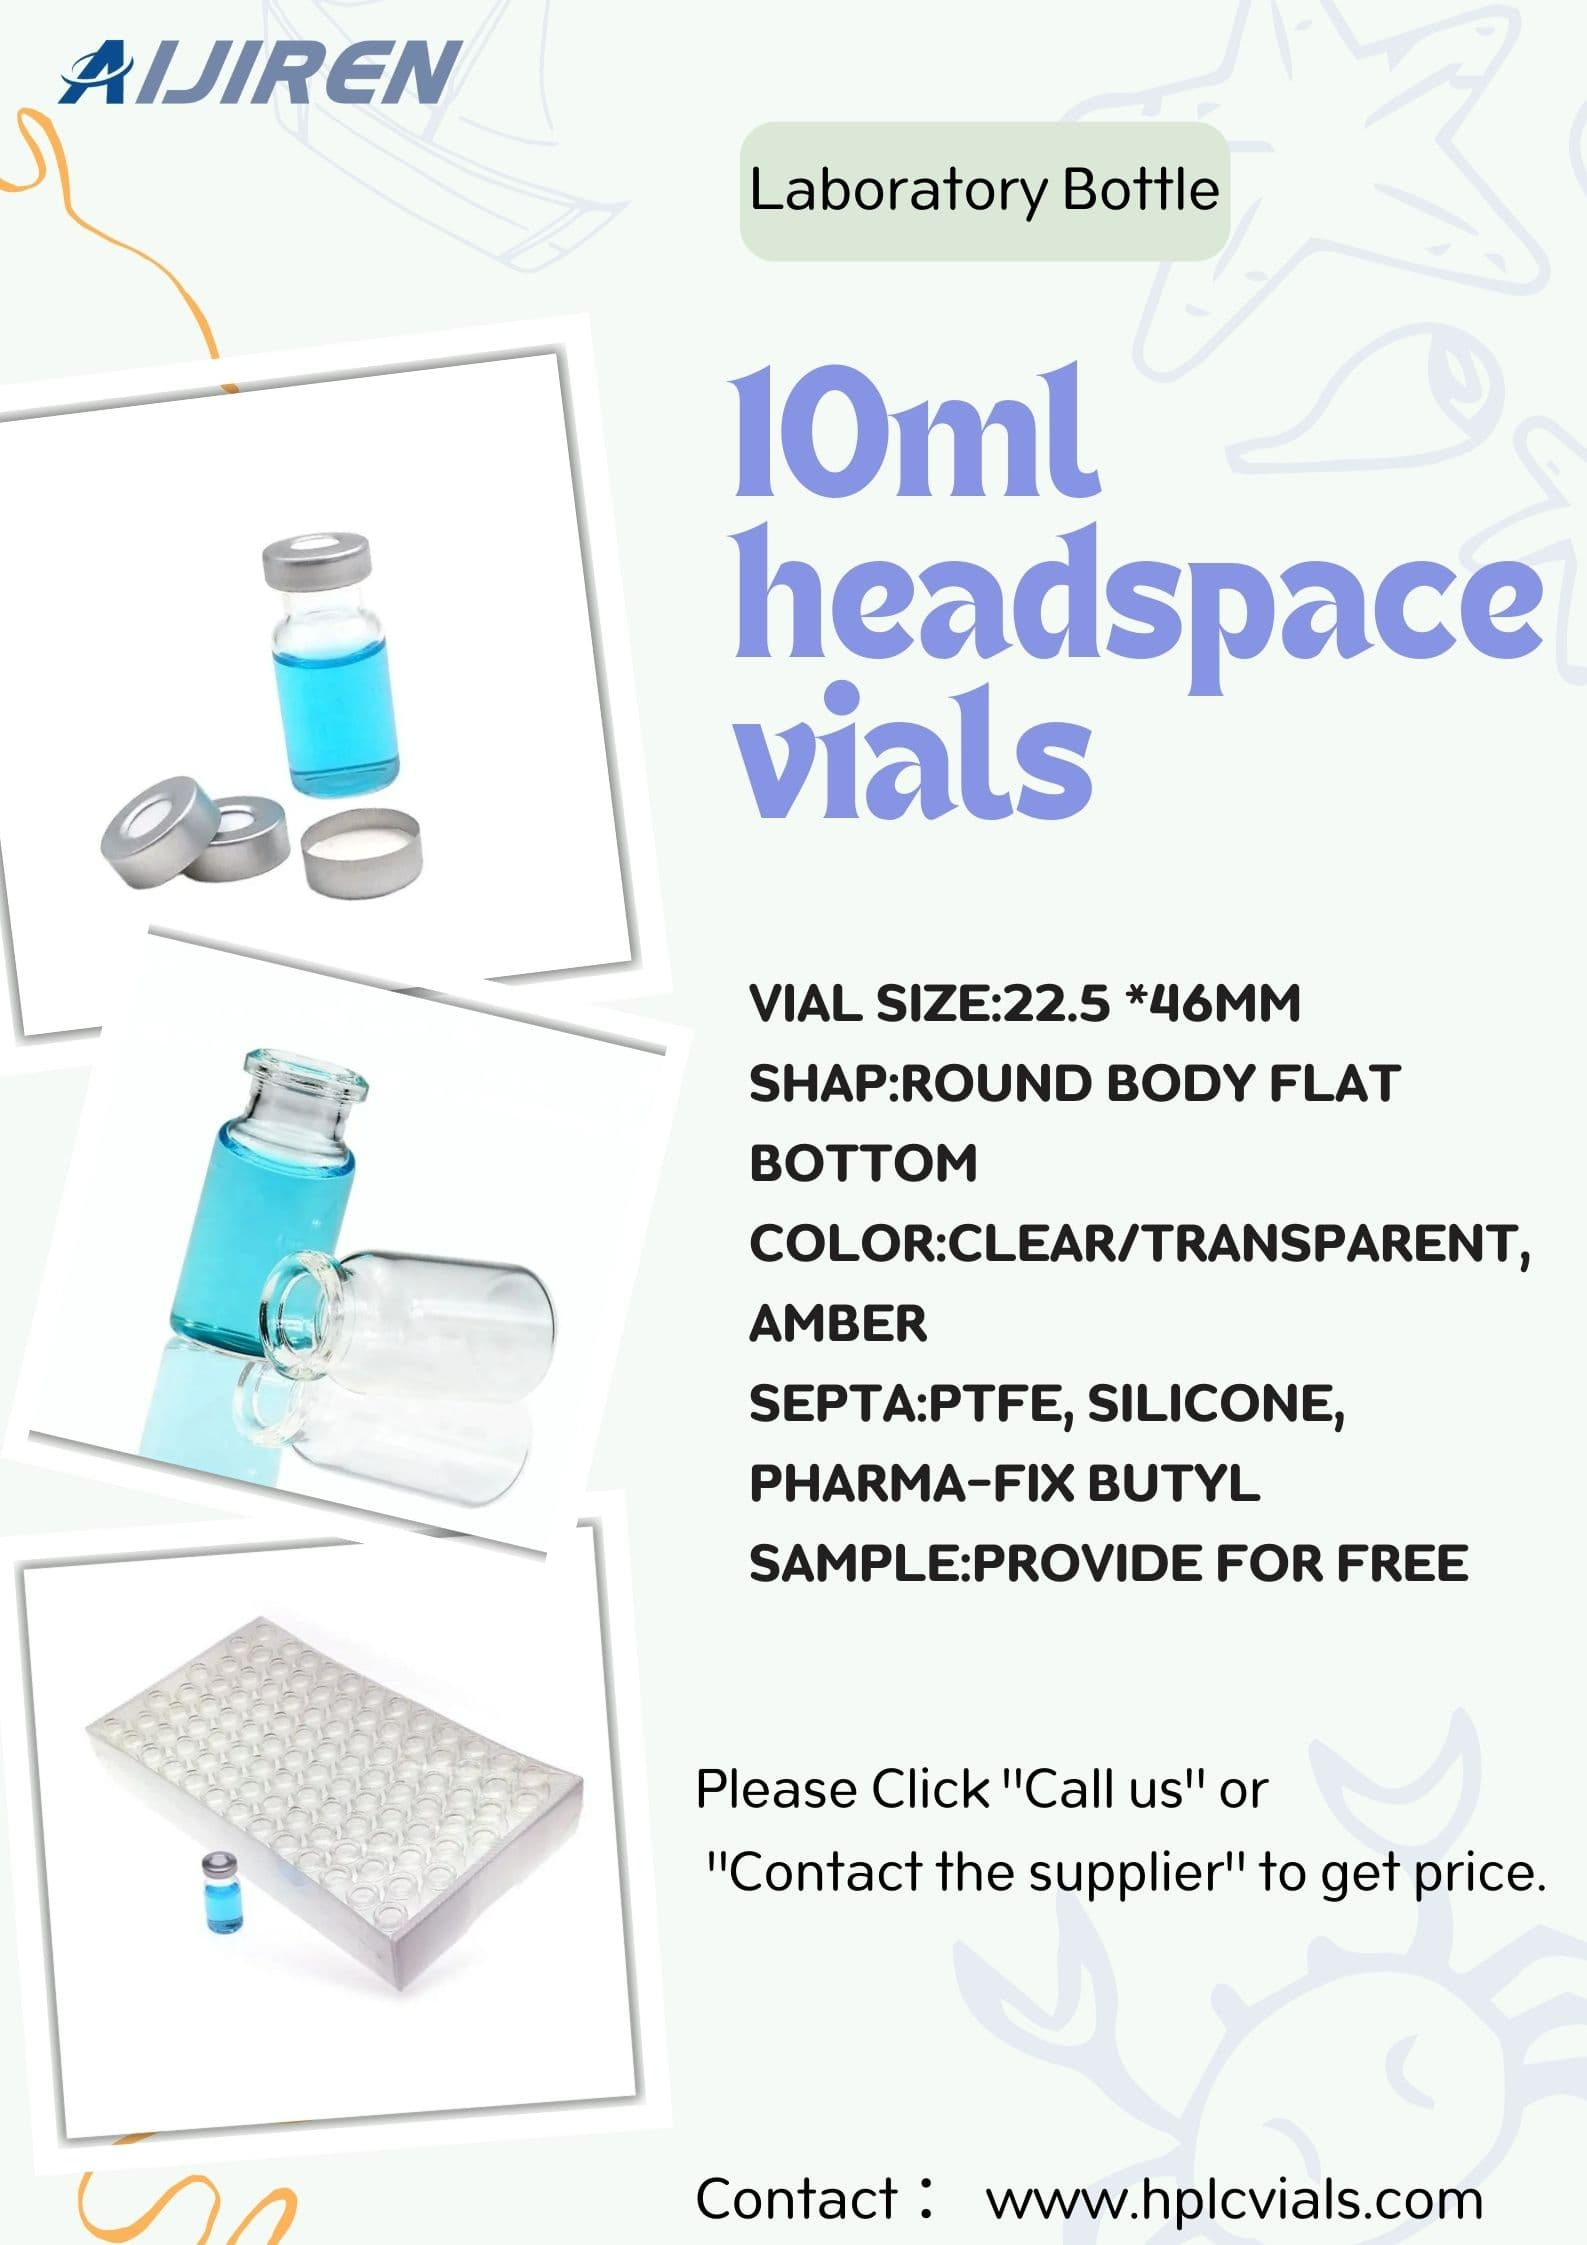 20ml headspace vial10ml Laboratory PTFE, Silicone, Pharma-Fix Butyl Gas chromatography PTFE, headspace vials